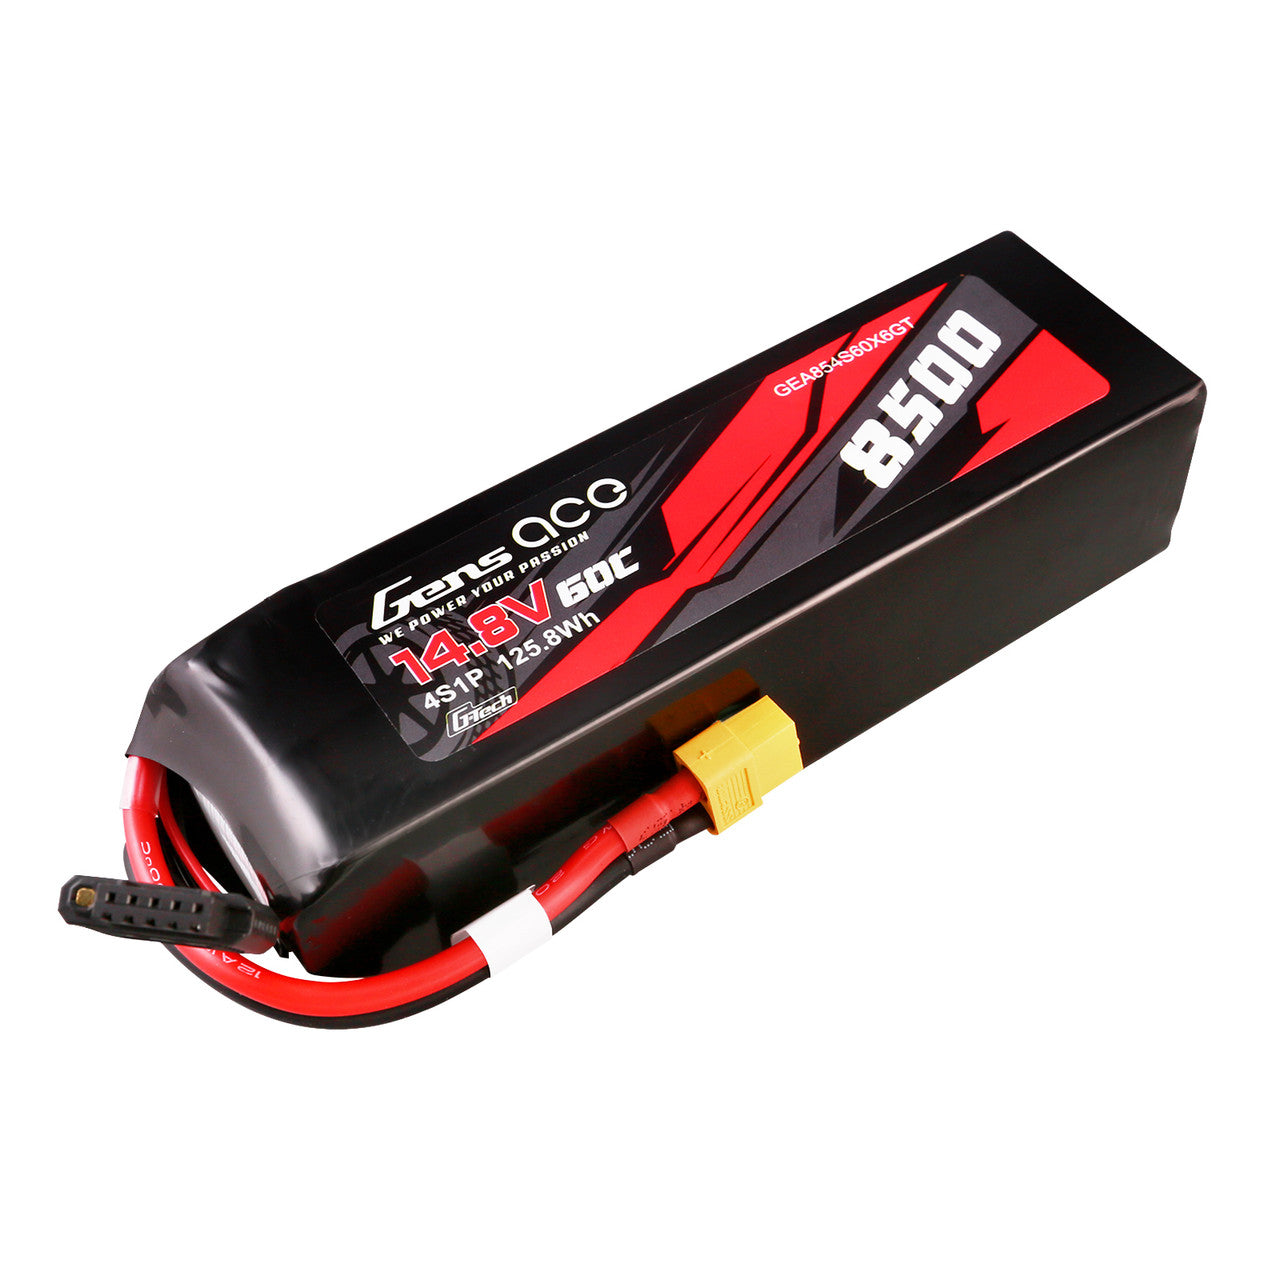 GEA854S60X6GT Gens Ace 14.8V 60C 4S 8500mAh G-Tech Lipo Battery Pack With XT60 Plug For Xmaxx 8S Car